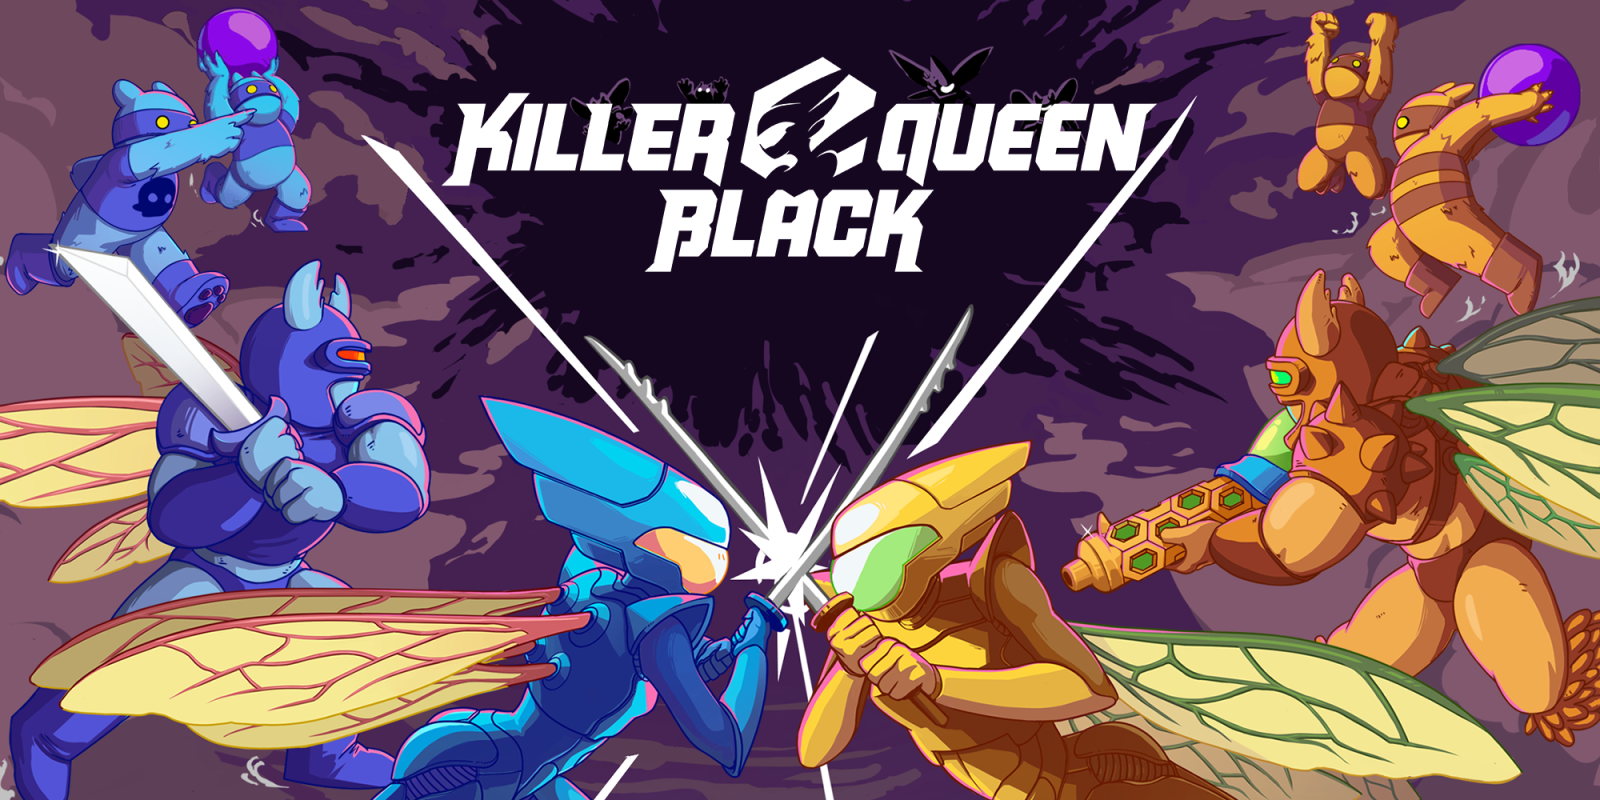 Killer Queen Black Logo